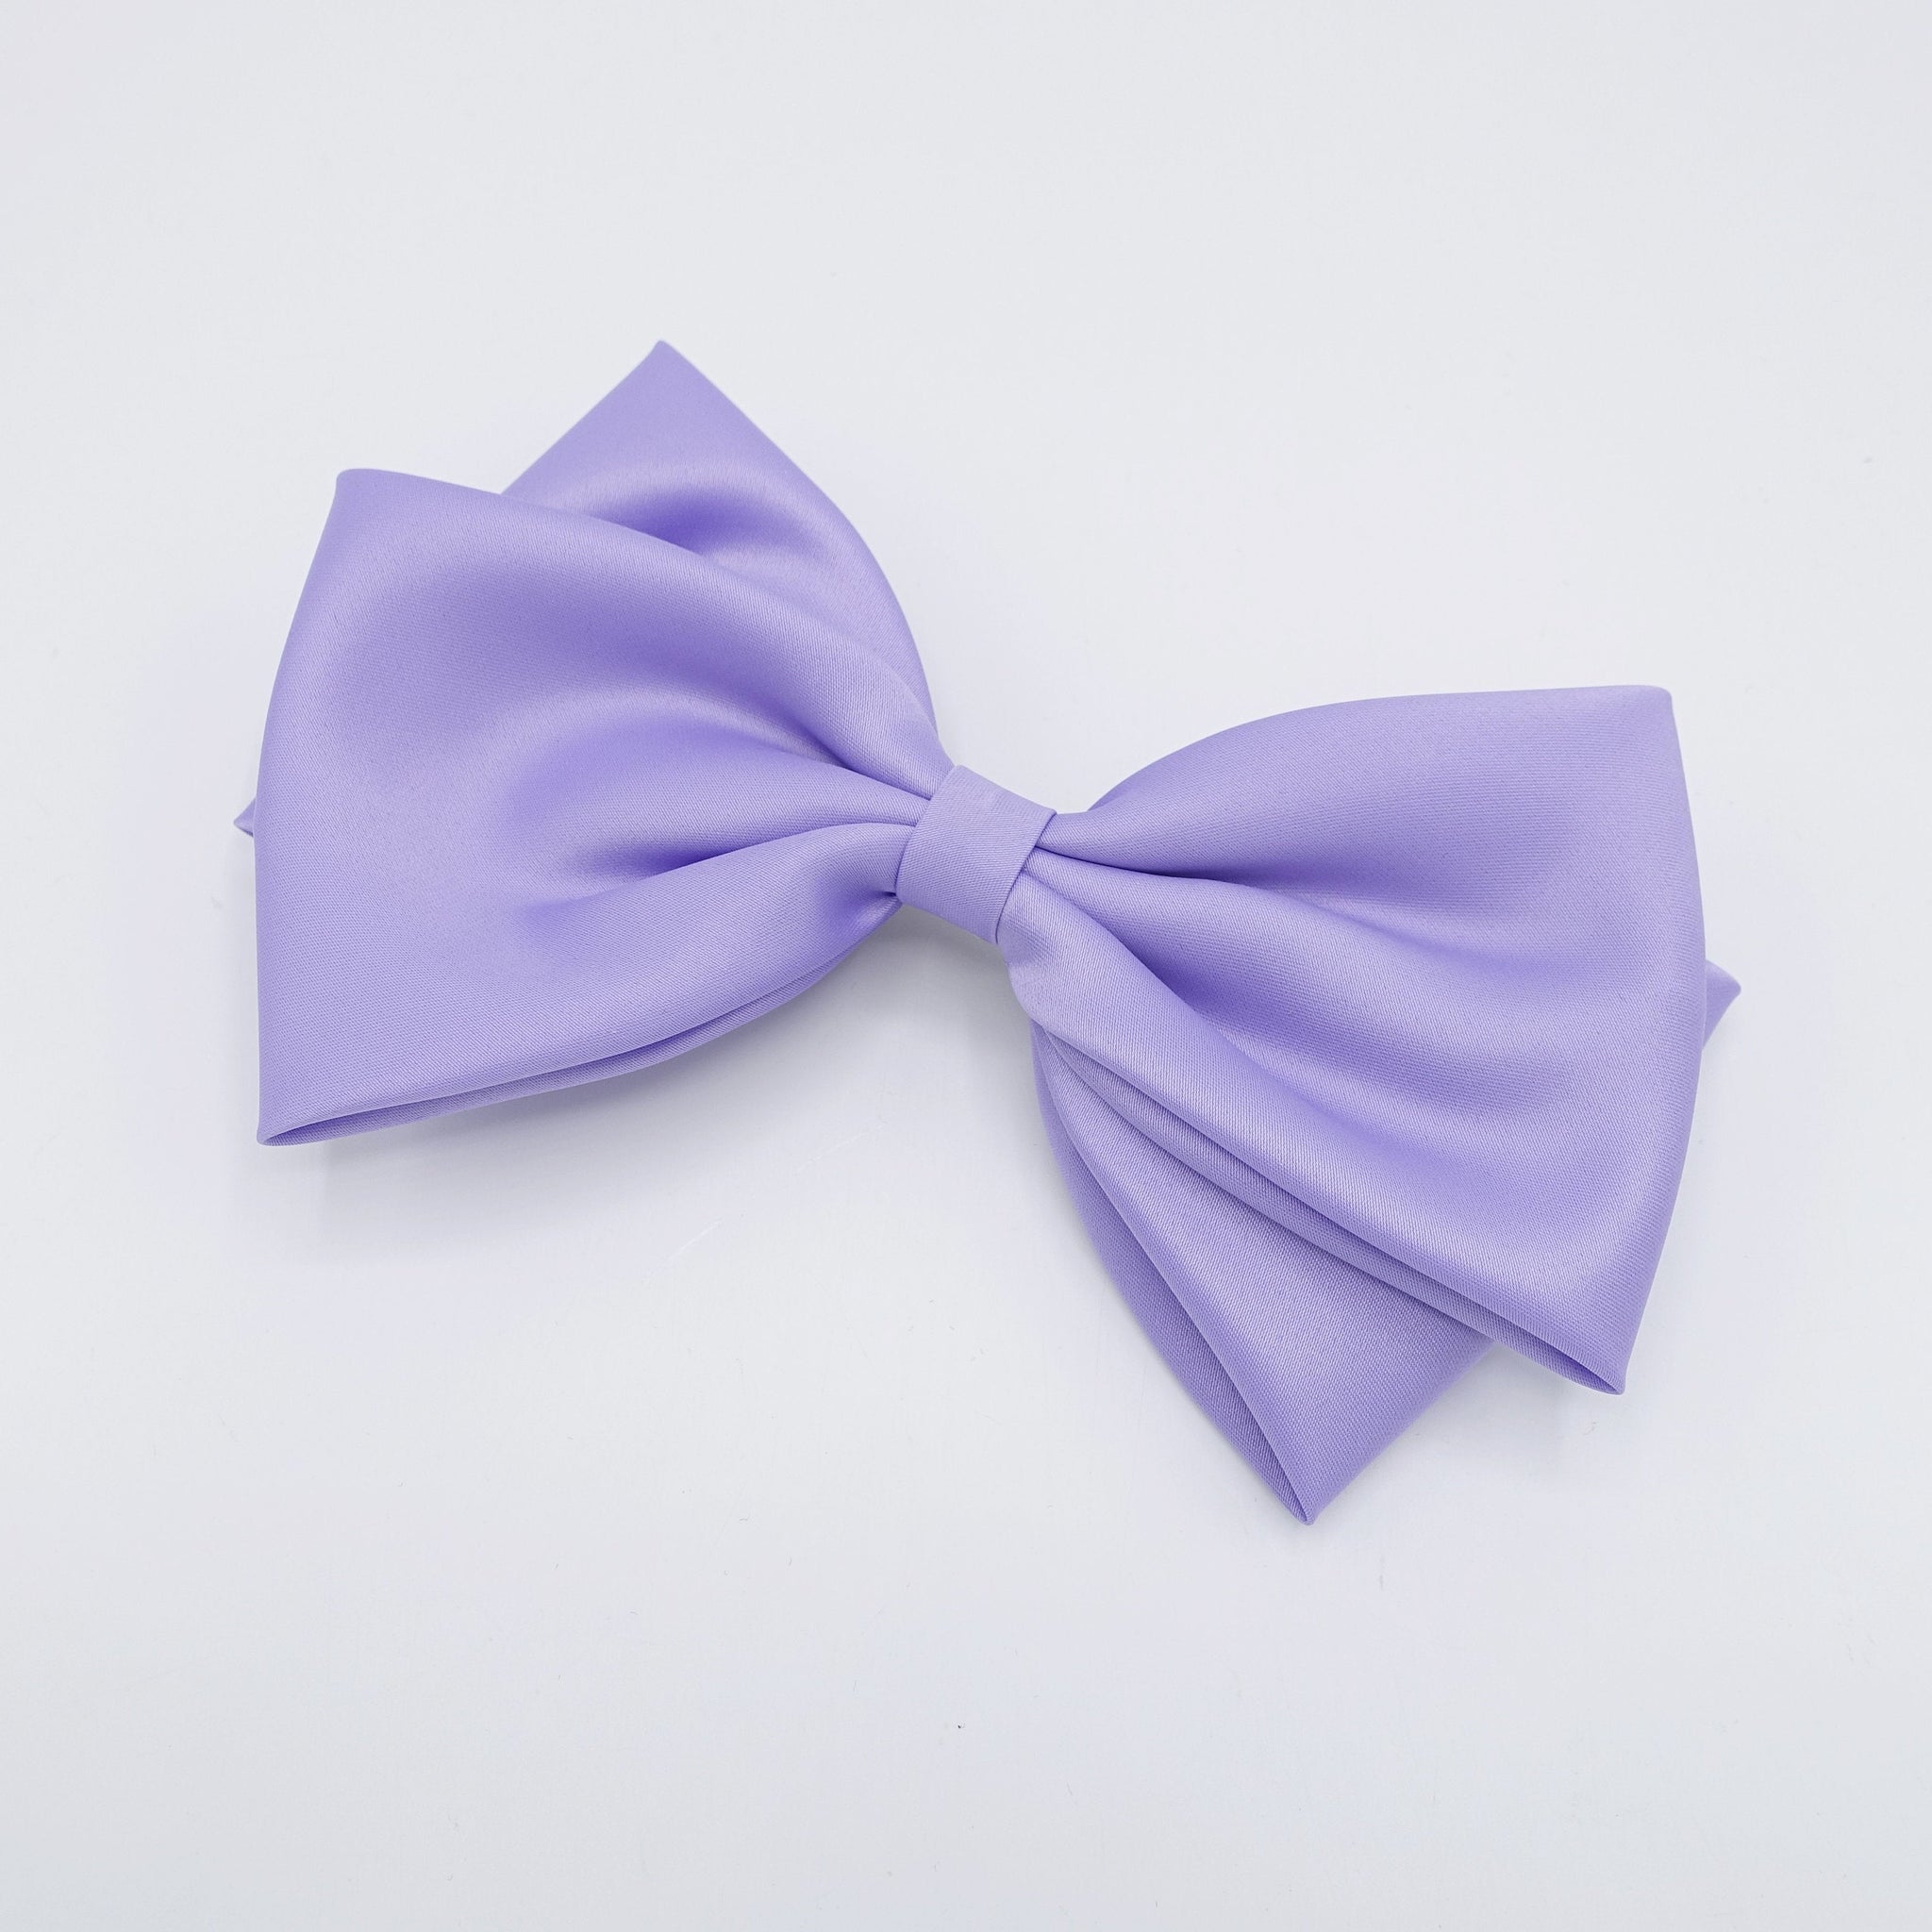 veryshine.com Barrette (Bow) Violet large satin hair bow, basic style hair bow for women